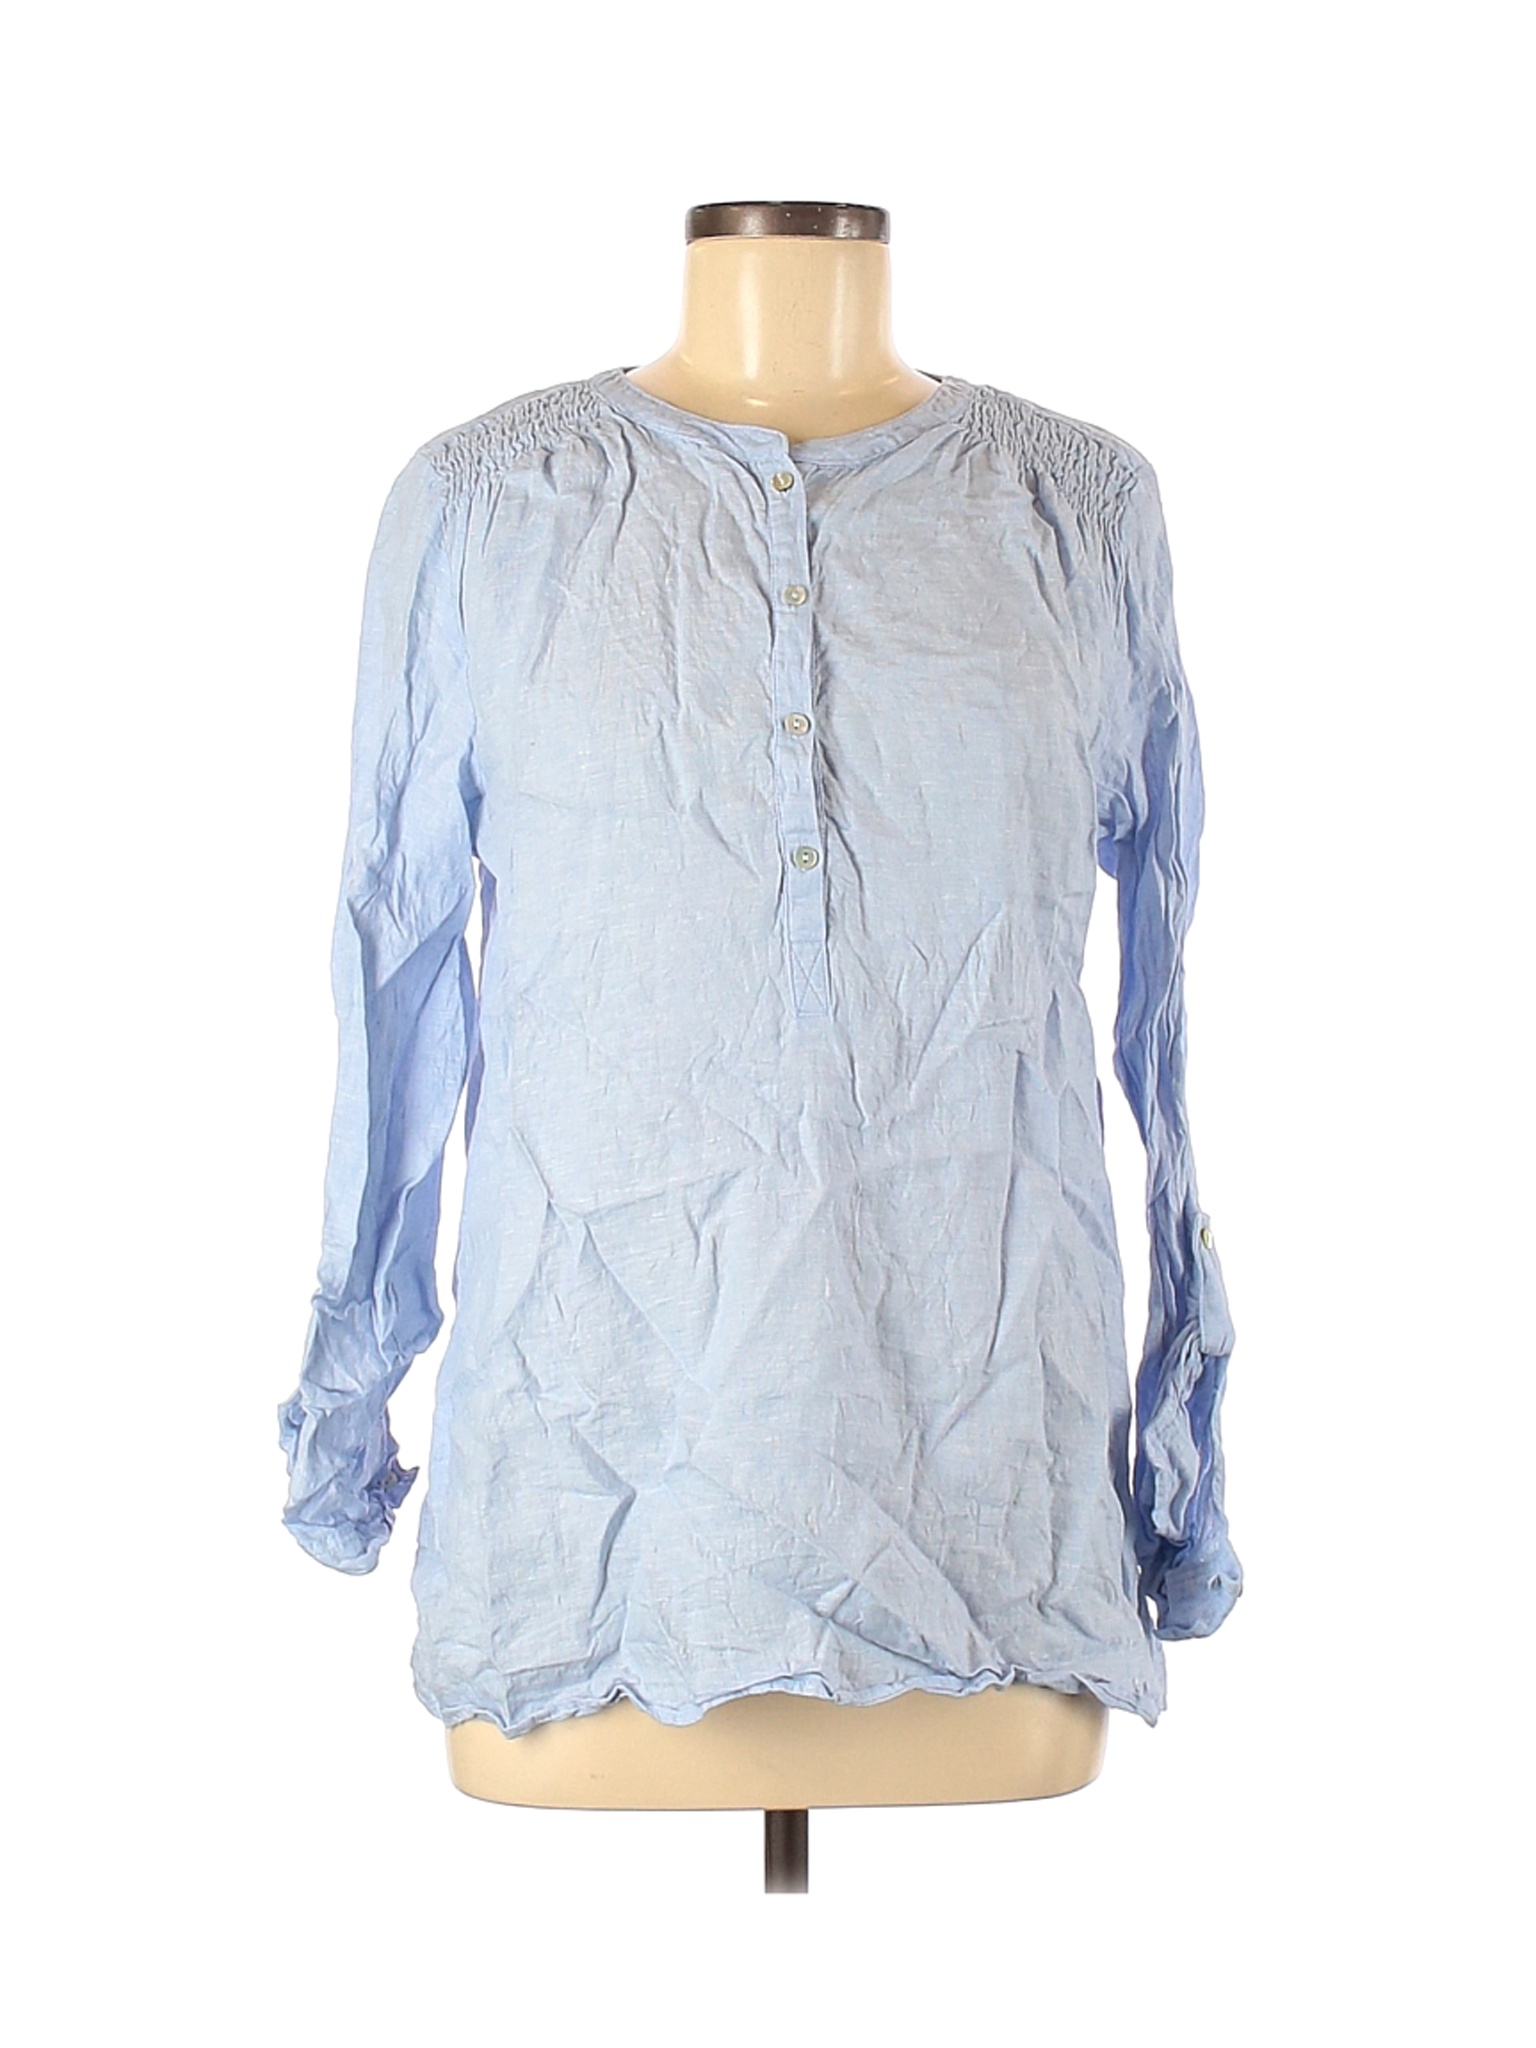 Sigrid Olsen 100% Linen Blue Long Sleeve Blouse Size M - 84% off | thredUP